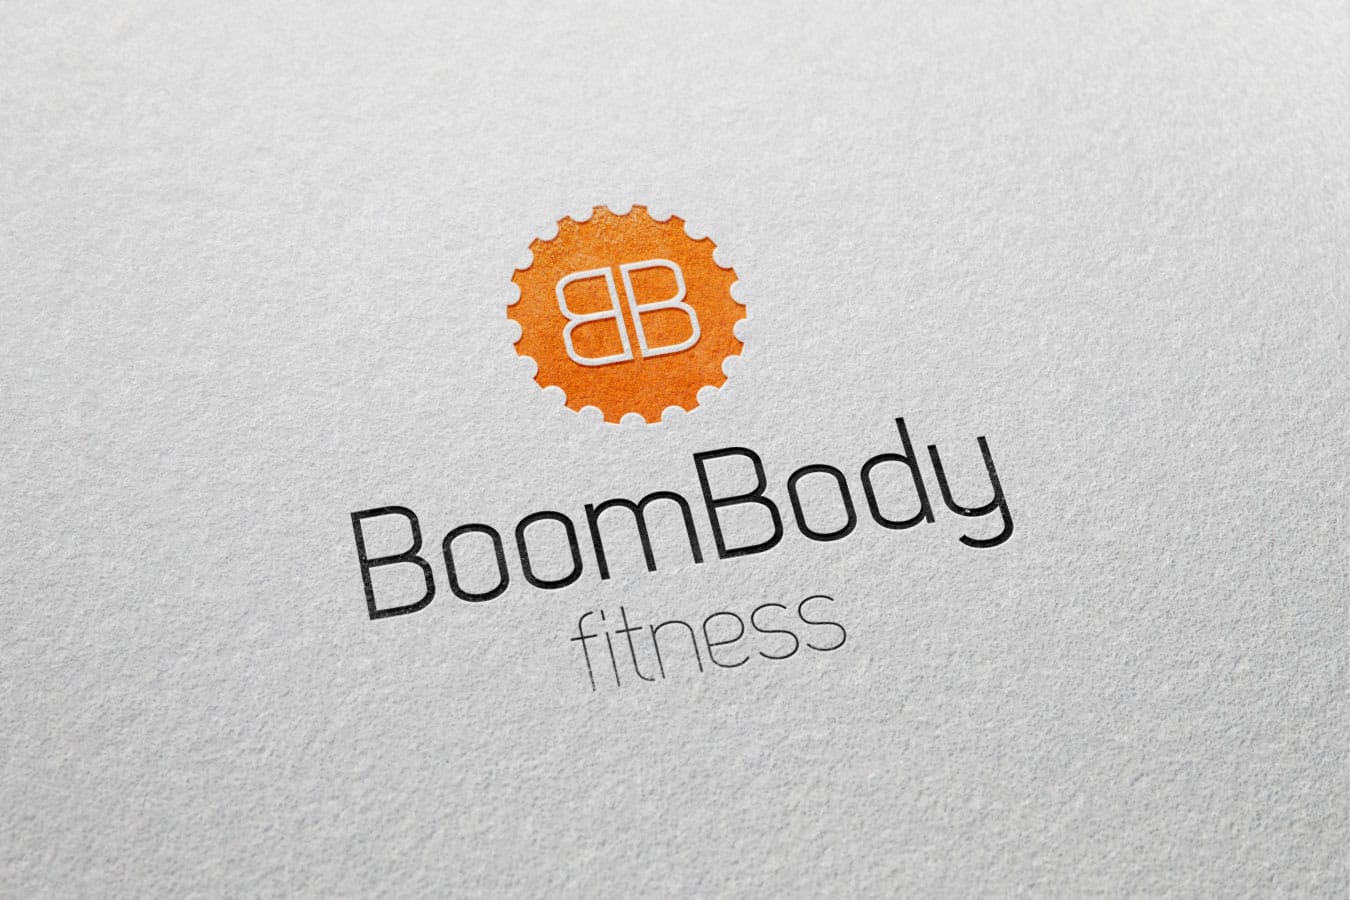 logos_boombody1